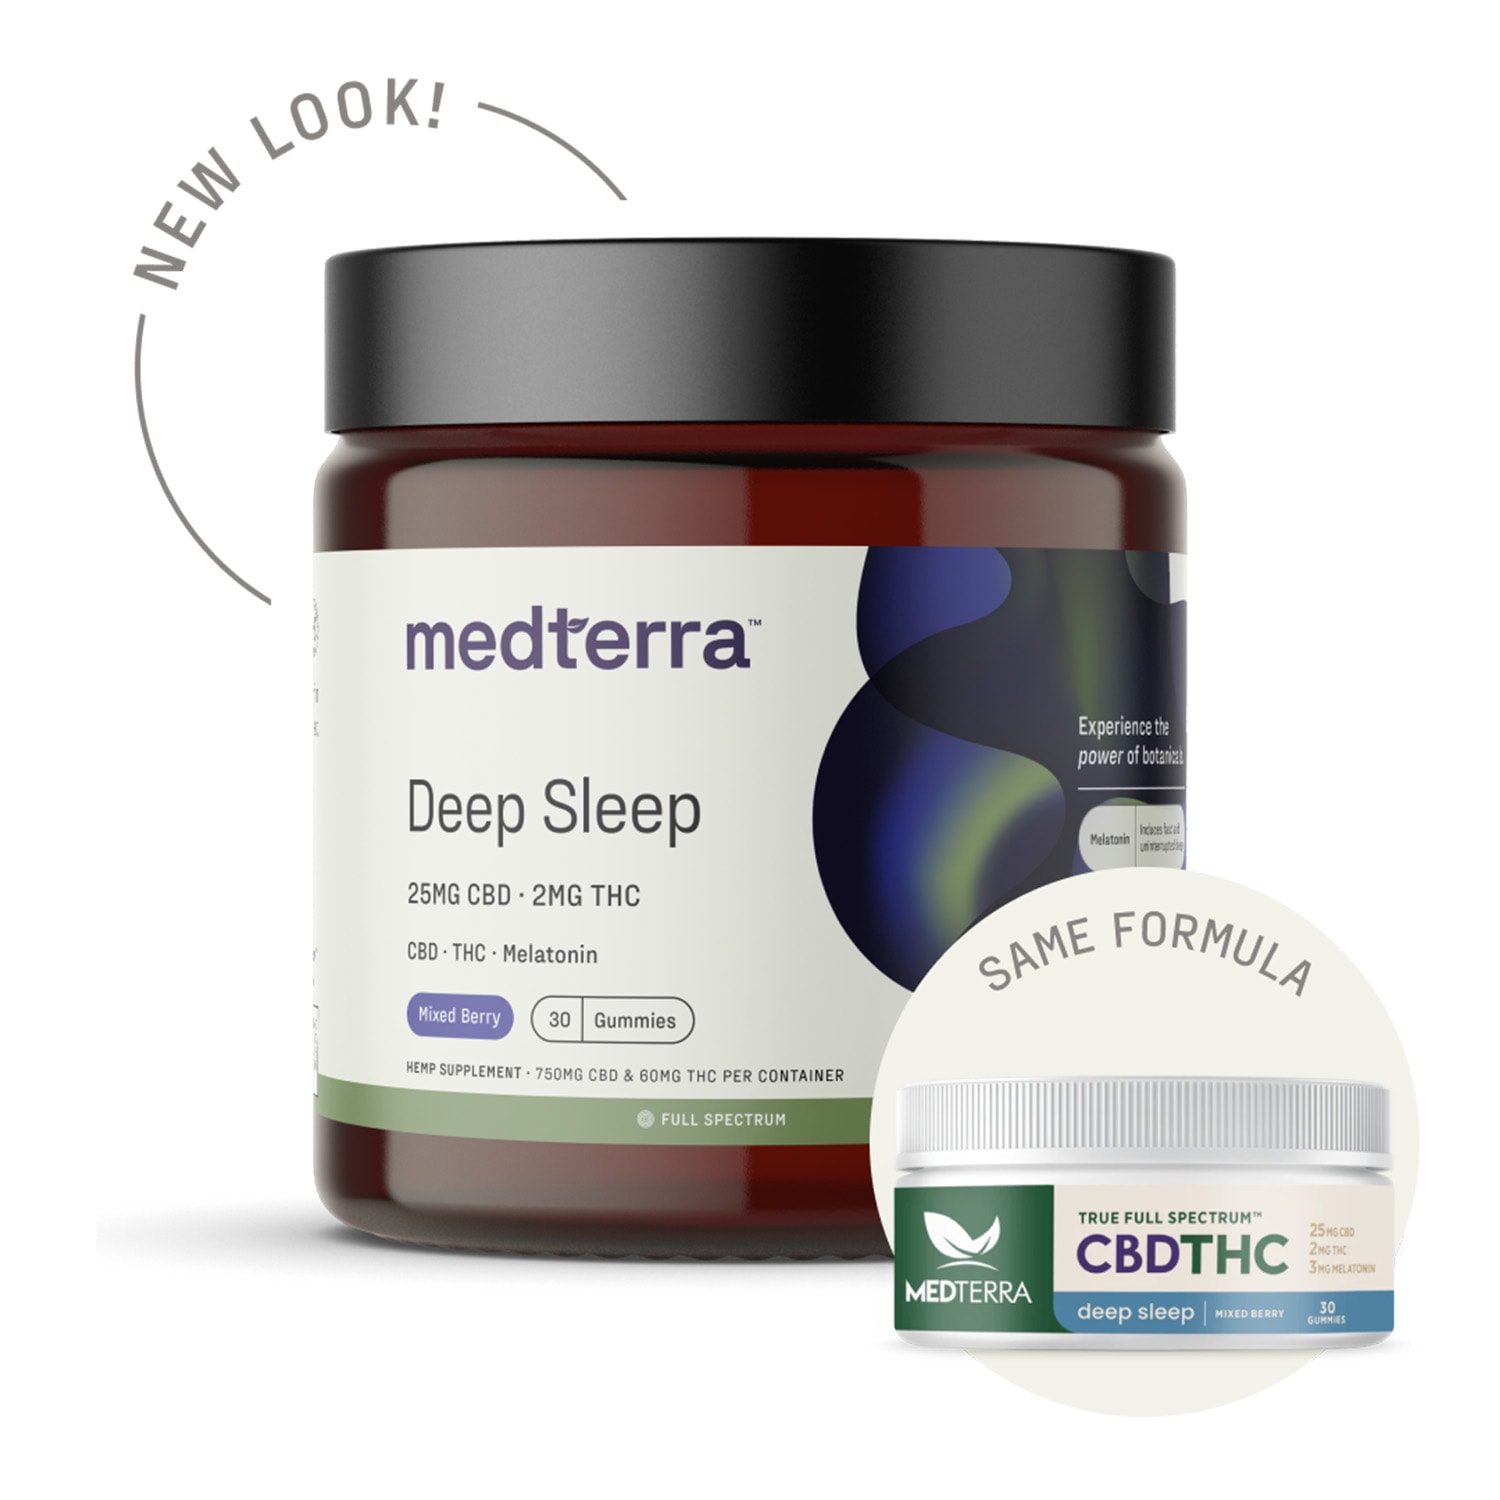 Medterra, Deep Sleep 25mg CBD + 2mg THC Gummies, Mixed Berry, Full Spectrum, 30ct, 60mg THC + 750mg CBD4